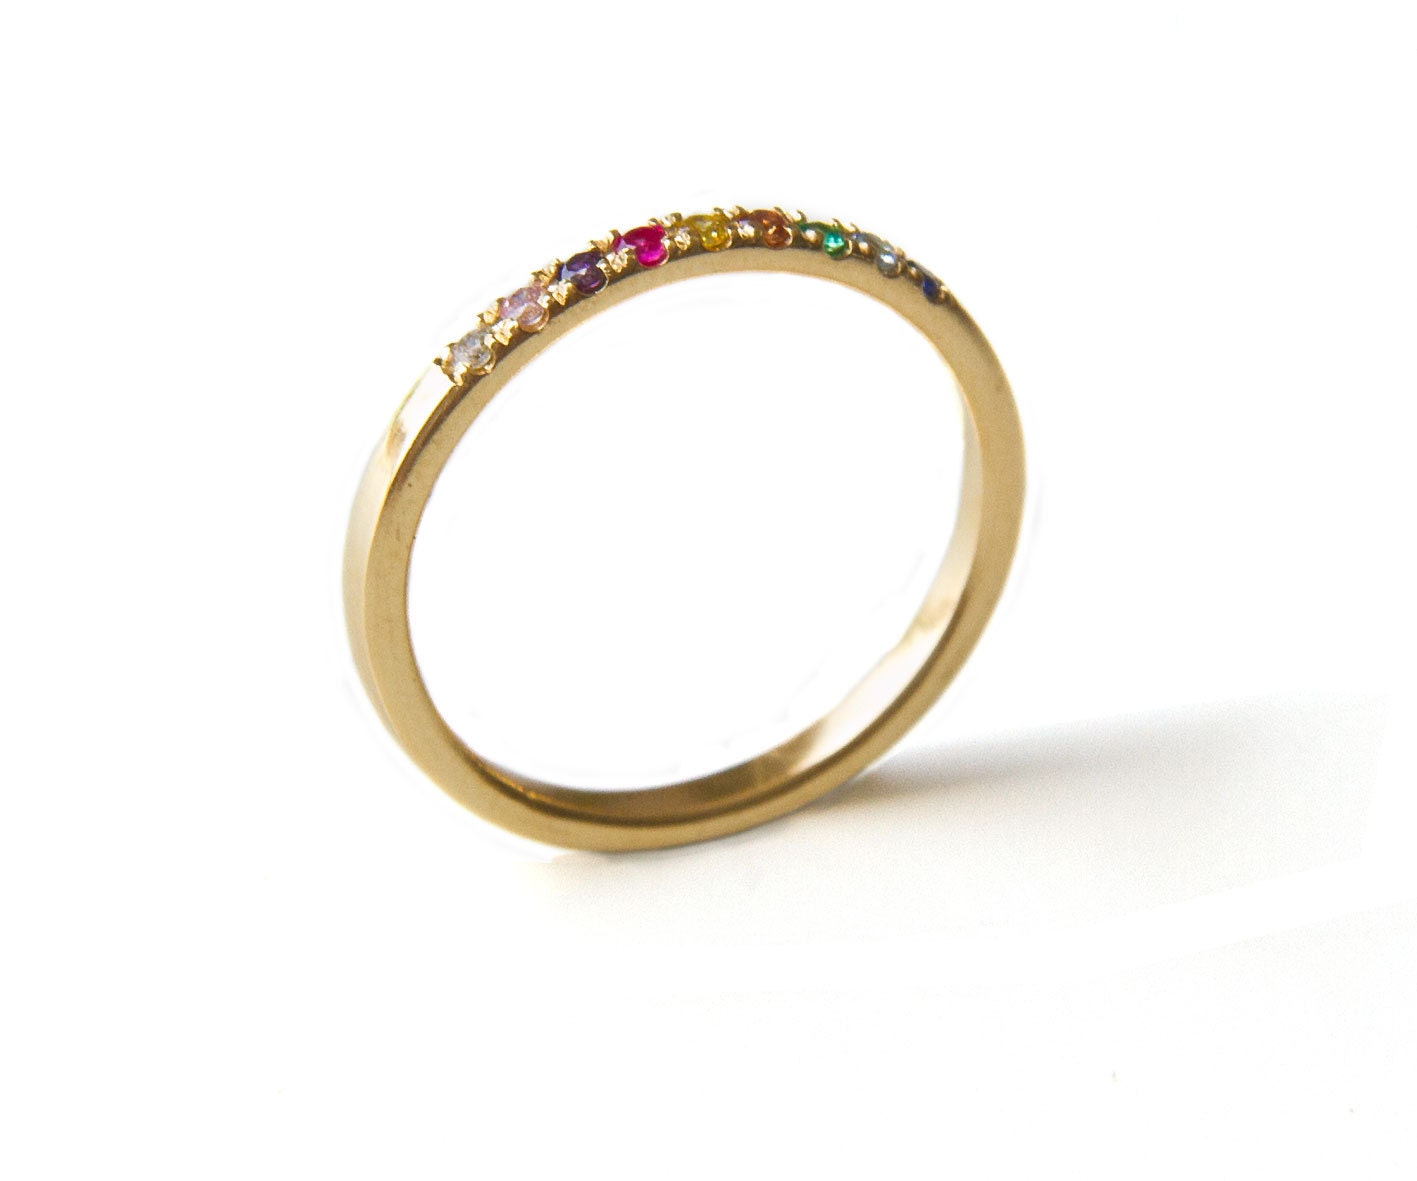 Thin Gemstone Ring, colorful Inlaid Ring